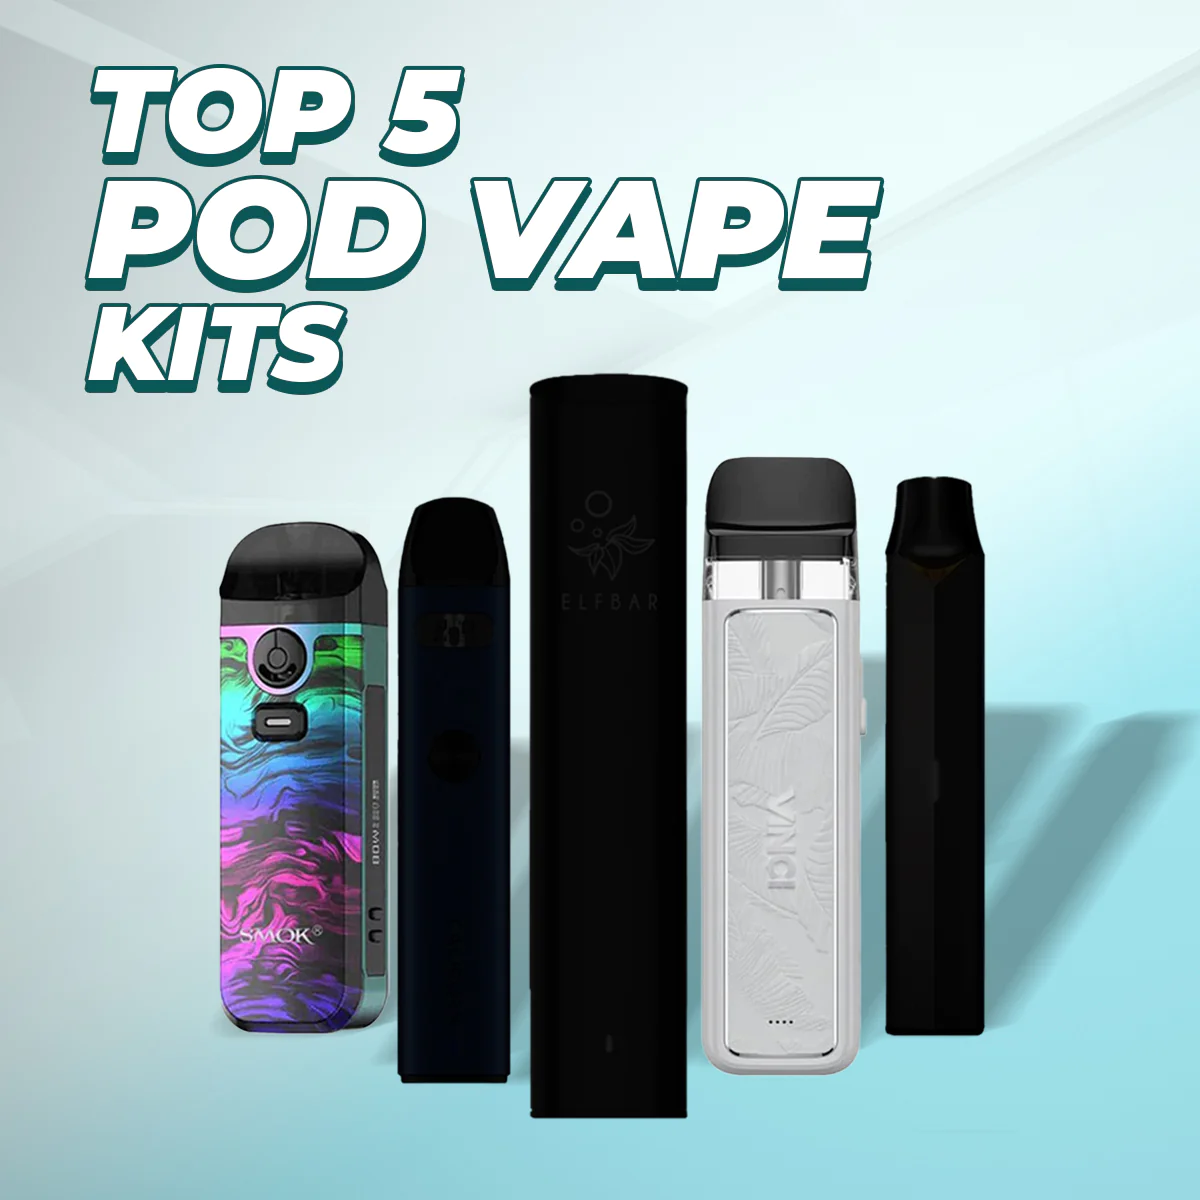 Top 5 Smok Vape Pod Kits